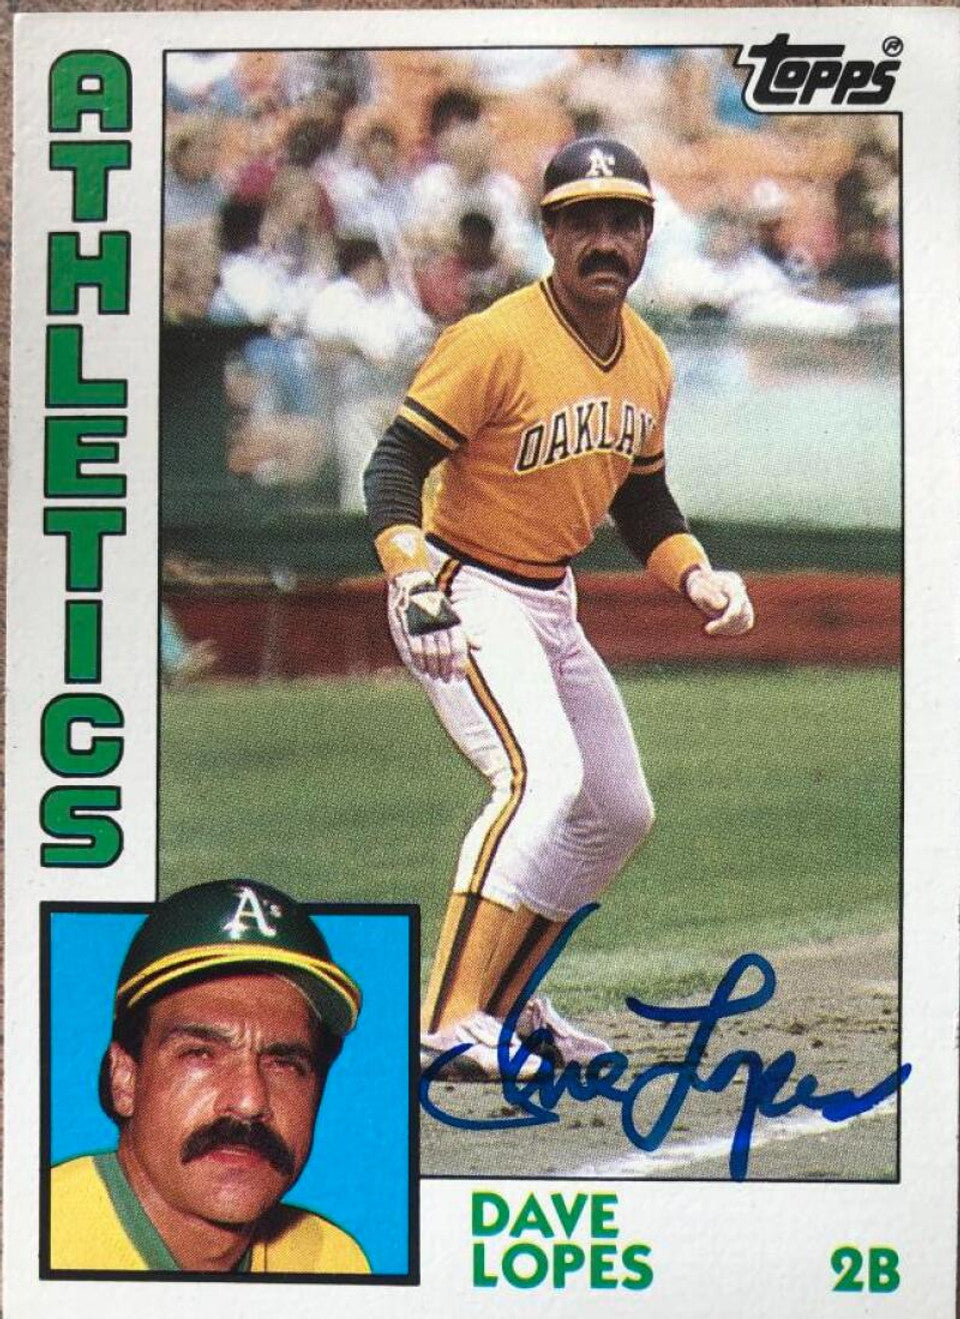 Davey Lopes Signed 1984 Topps Baseball Card - Oakland A's